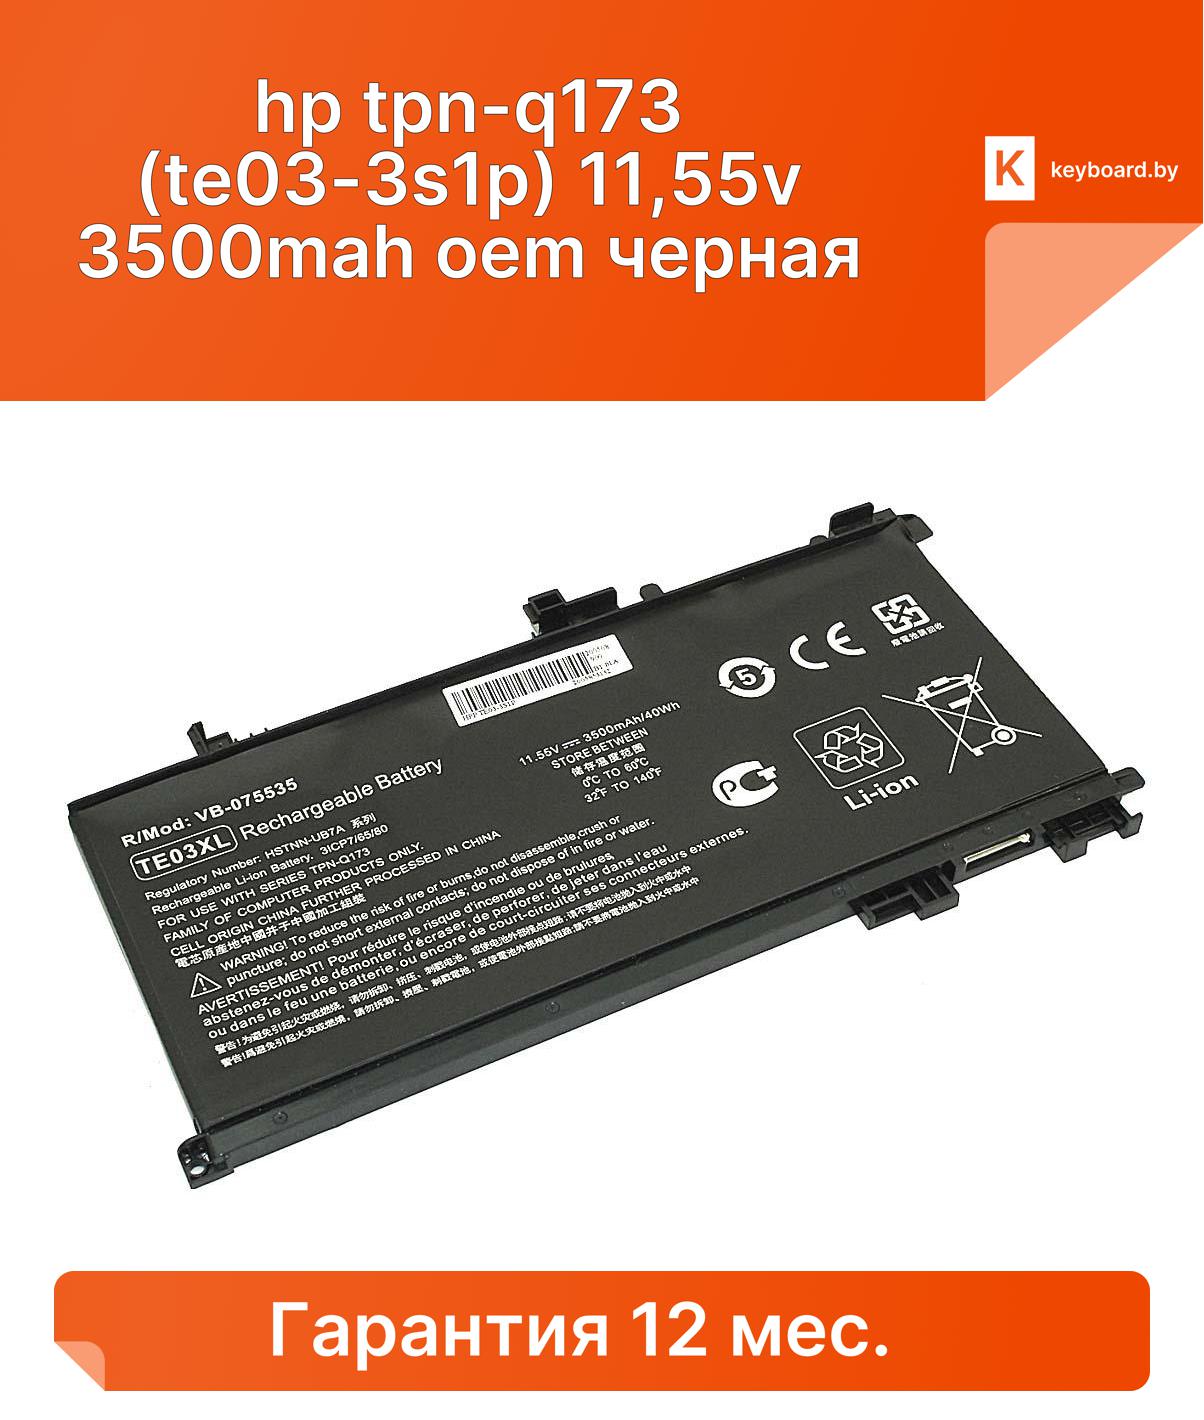 Аккумуляторная батарея для ноутбука hp tpn-q173 (te03-3s1p) 11,55v 3500mah oem черная